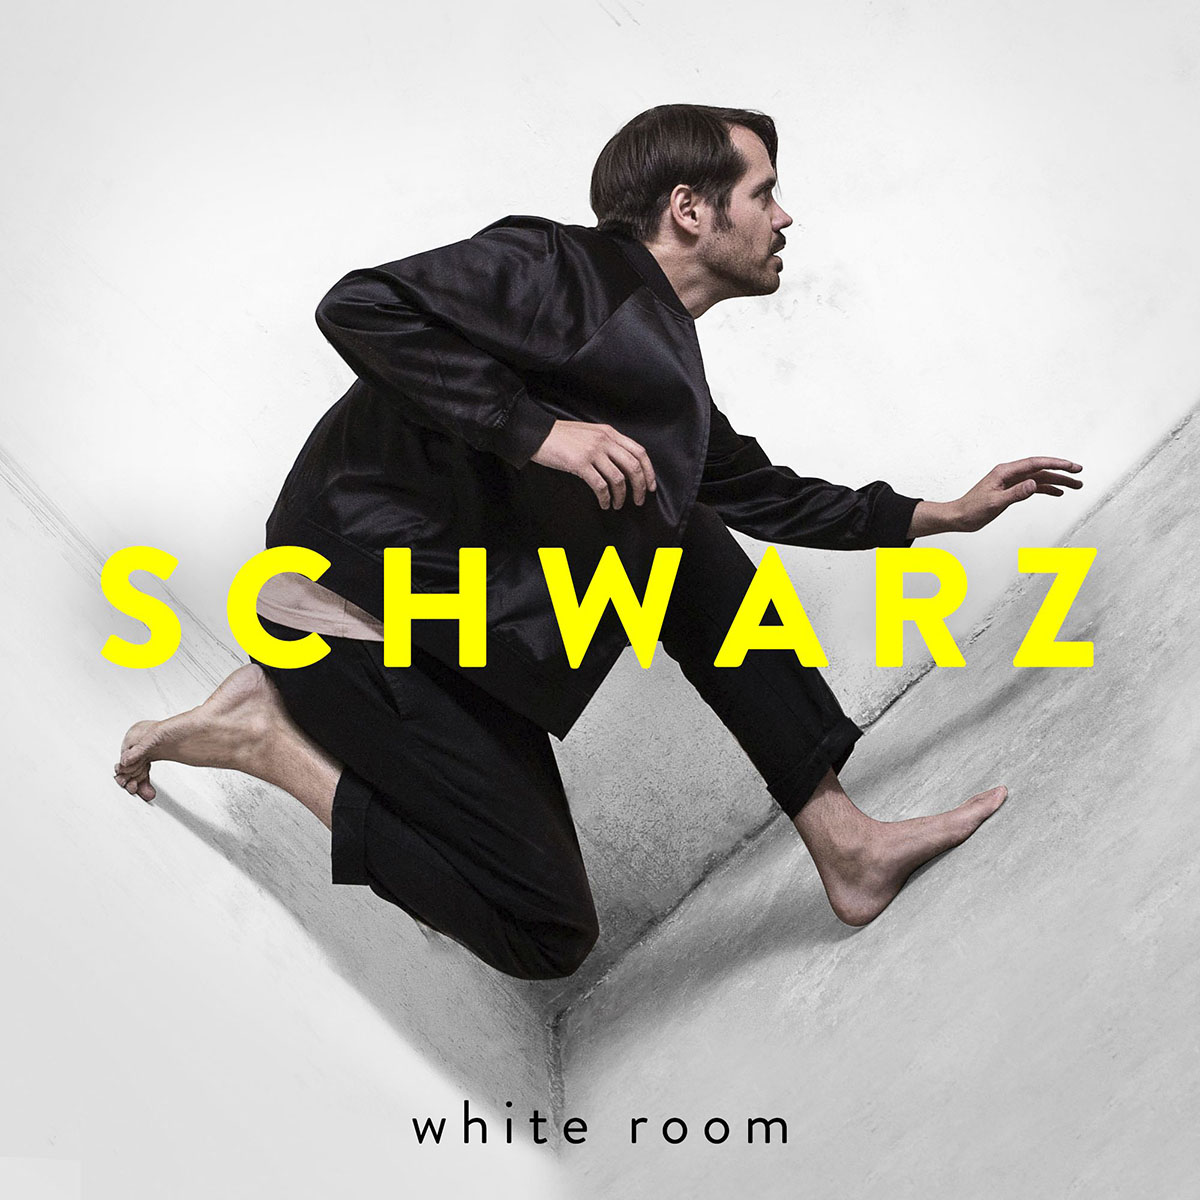 55CHWARZ Album White Room StyleheadsMusic (002)